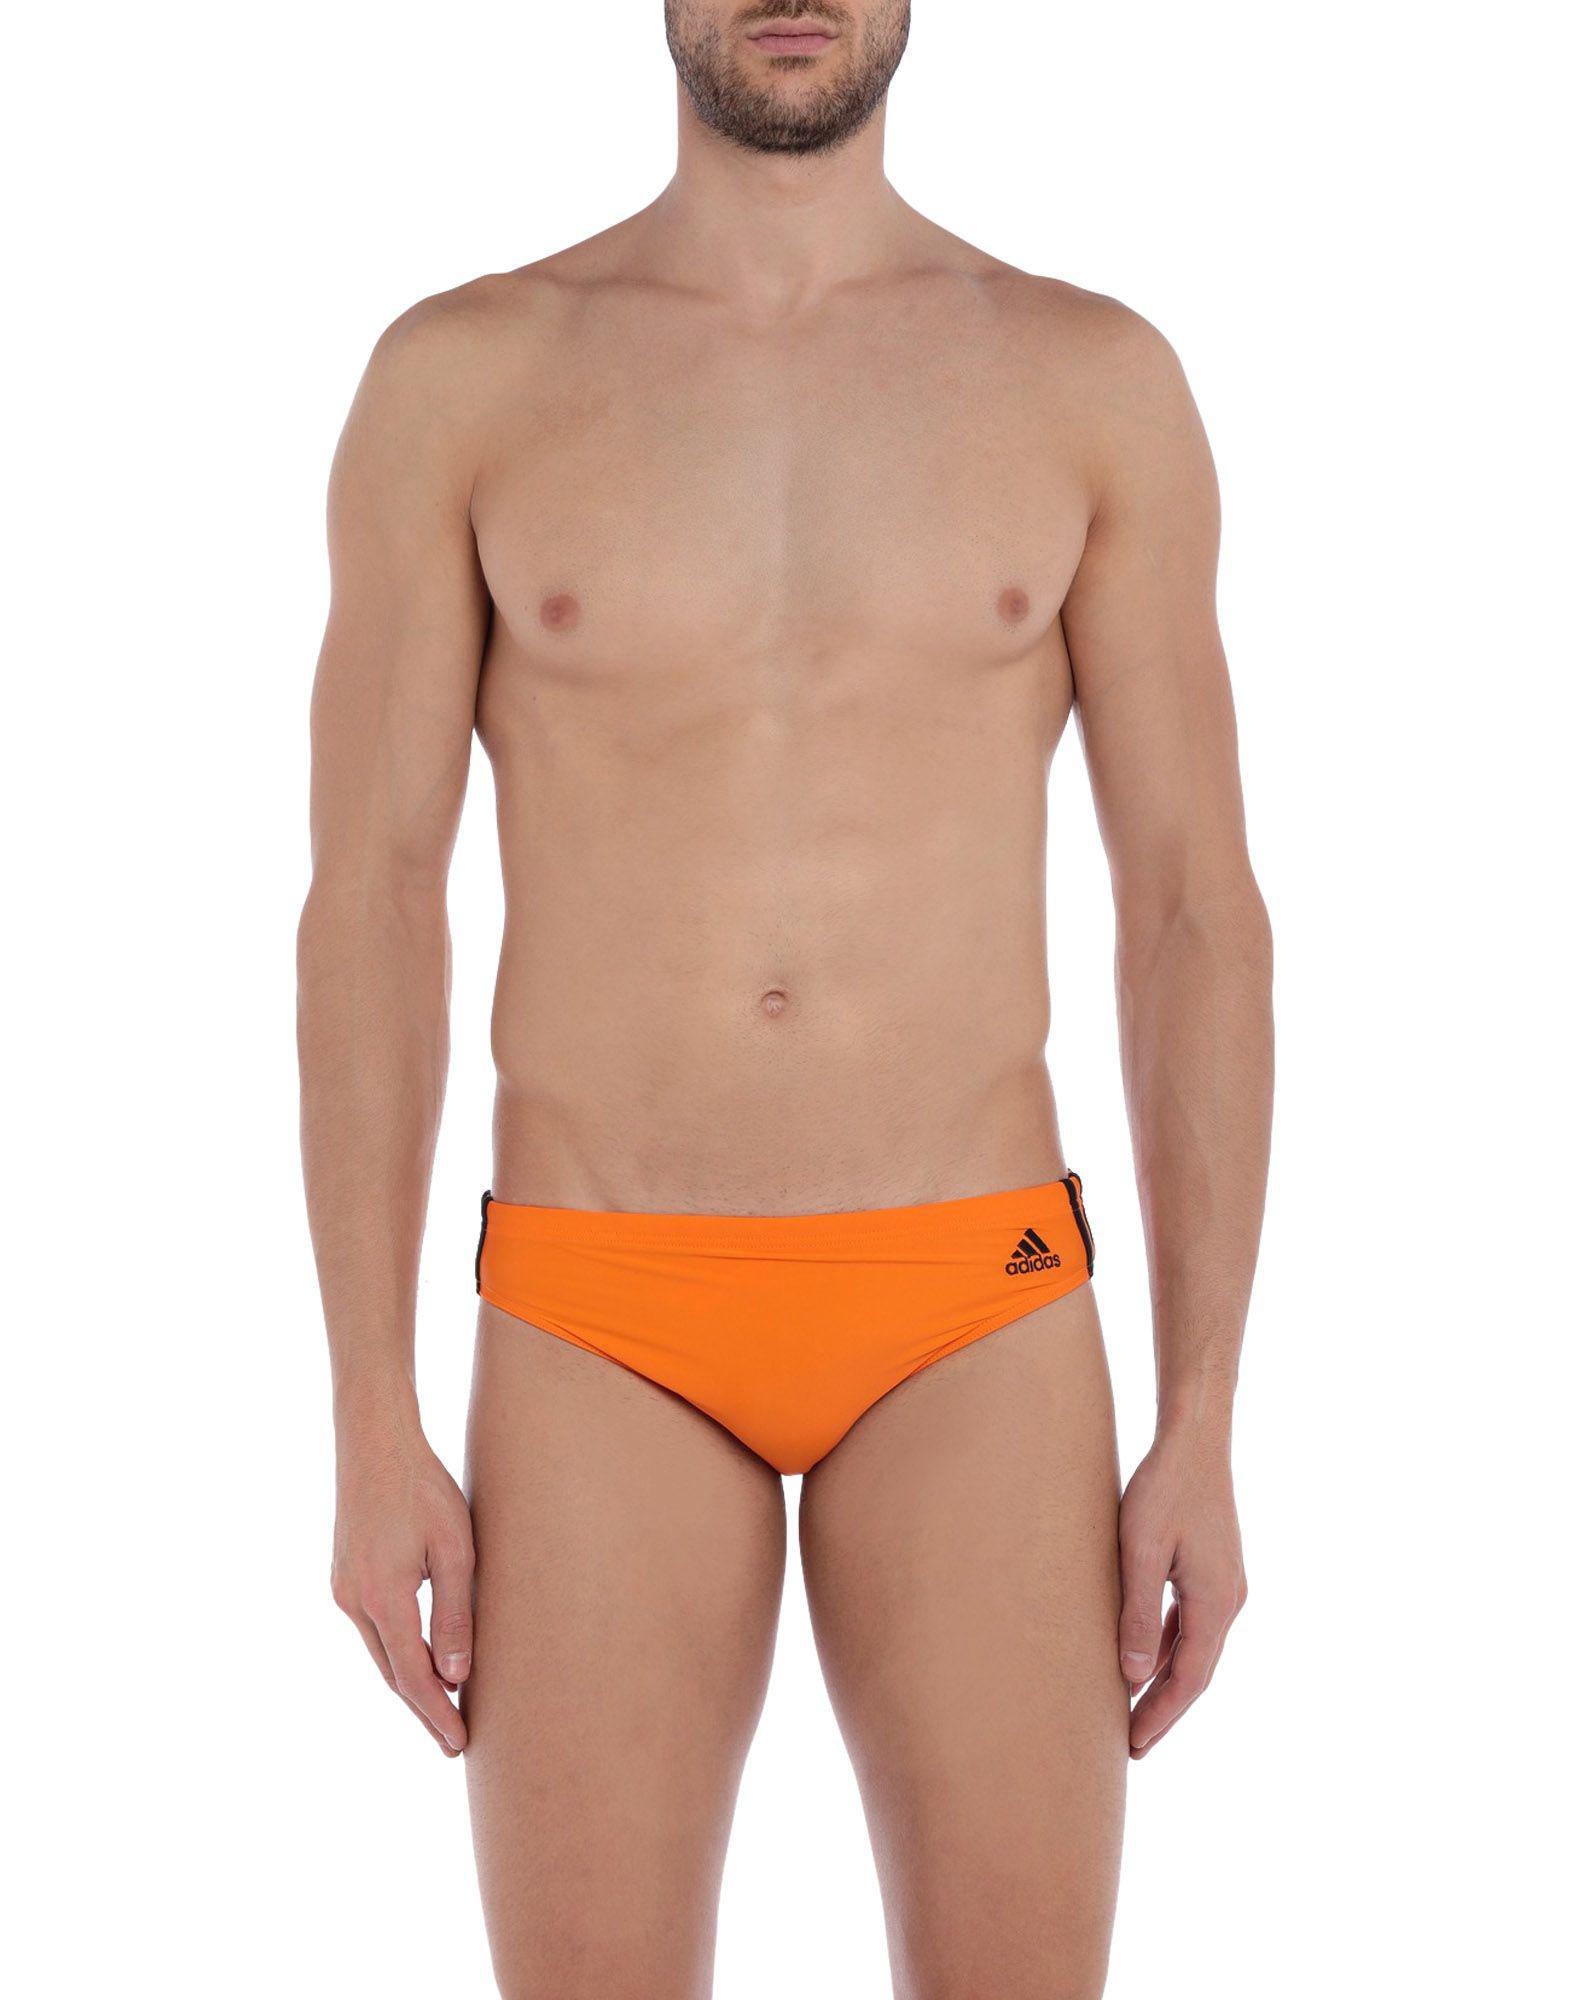 adidas Synthetic Swim Brief in Orange for Men - Lyst